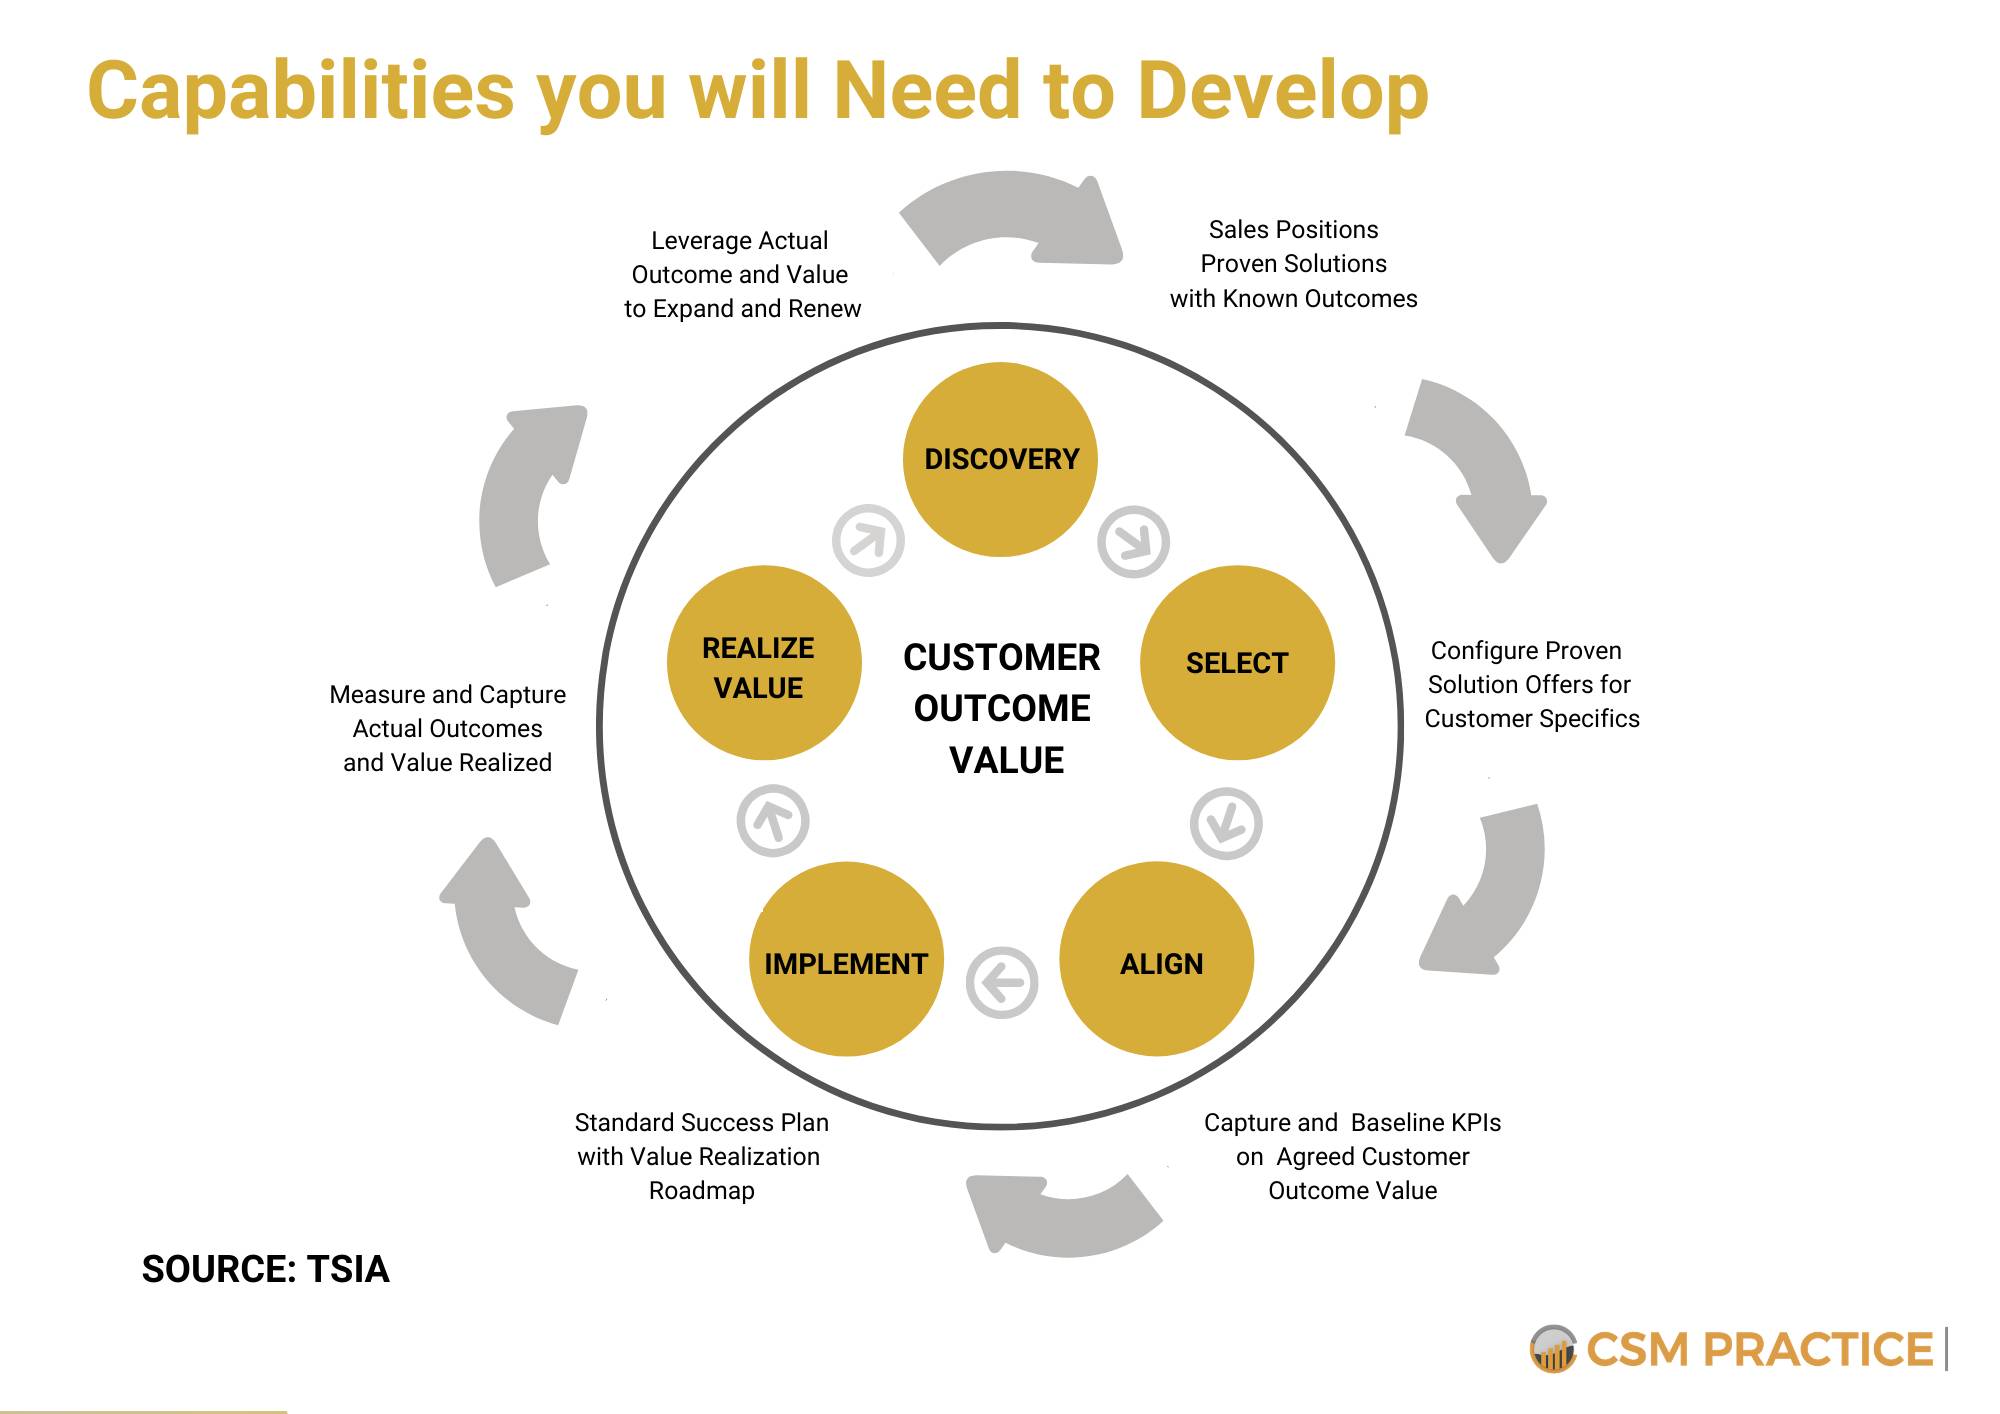 customer need to develop capabilities